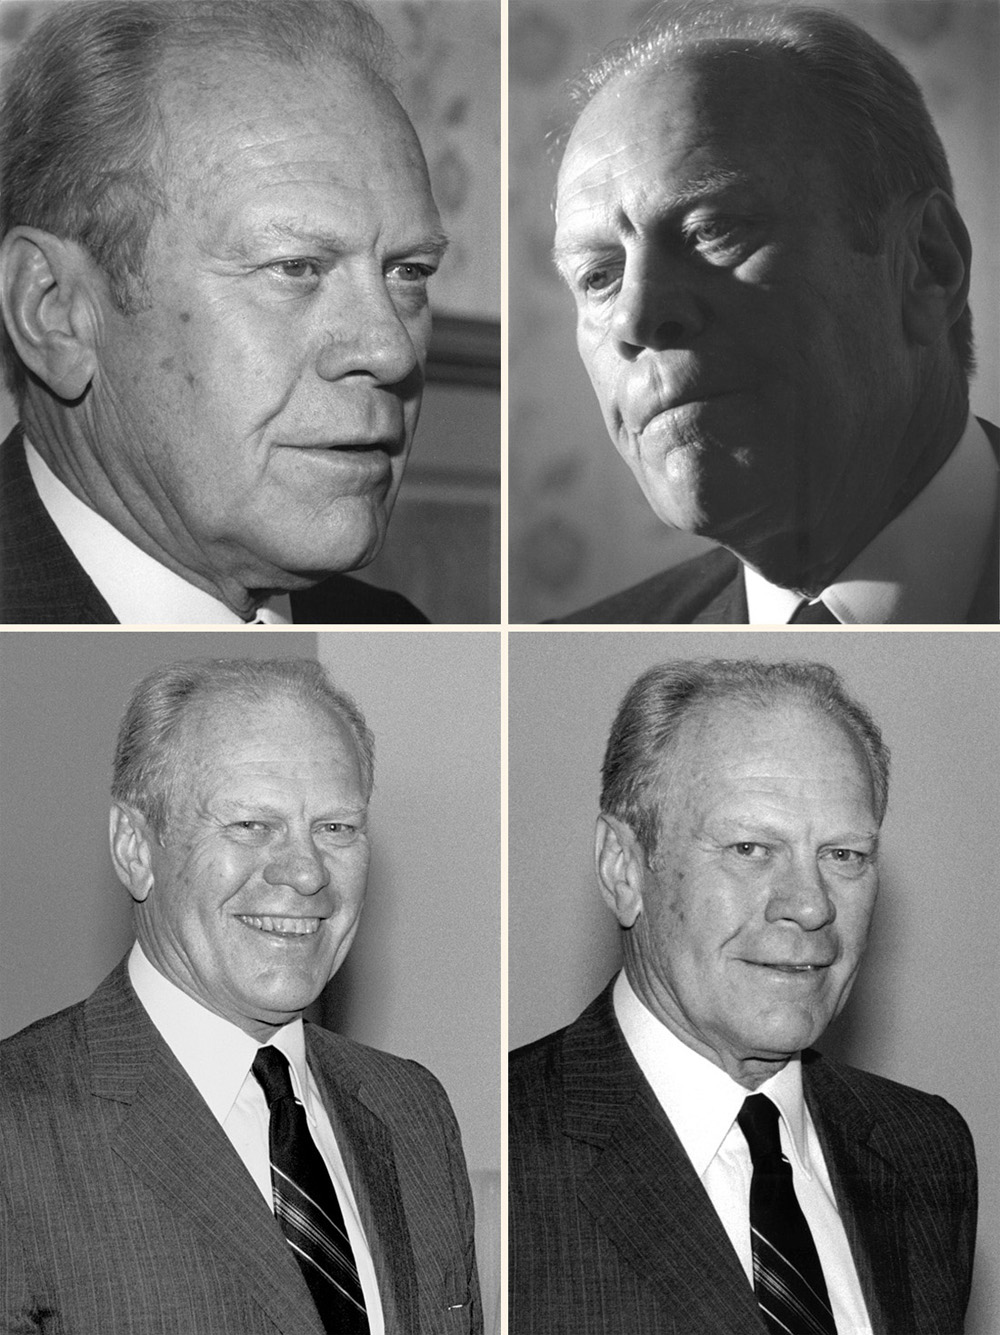 Mobile Alabama photographer Adrian Hoff's photos of President Gerald Ford.